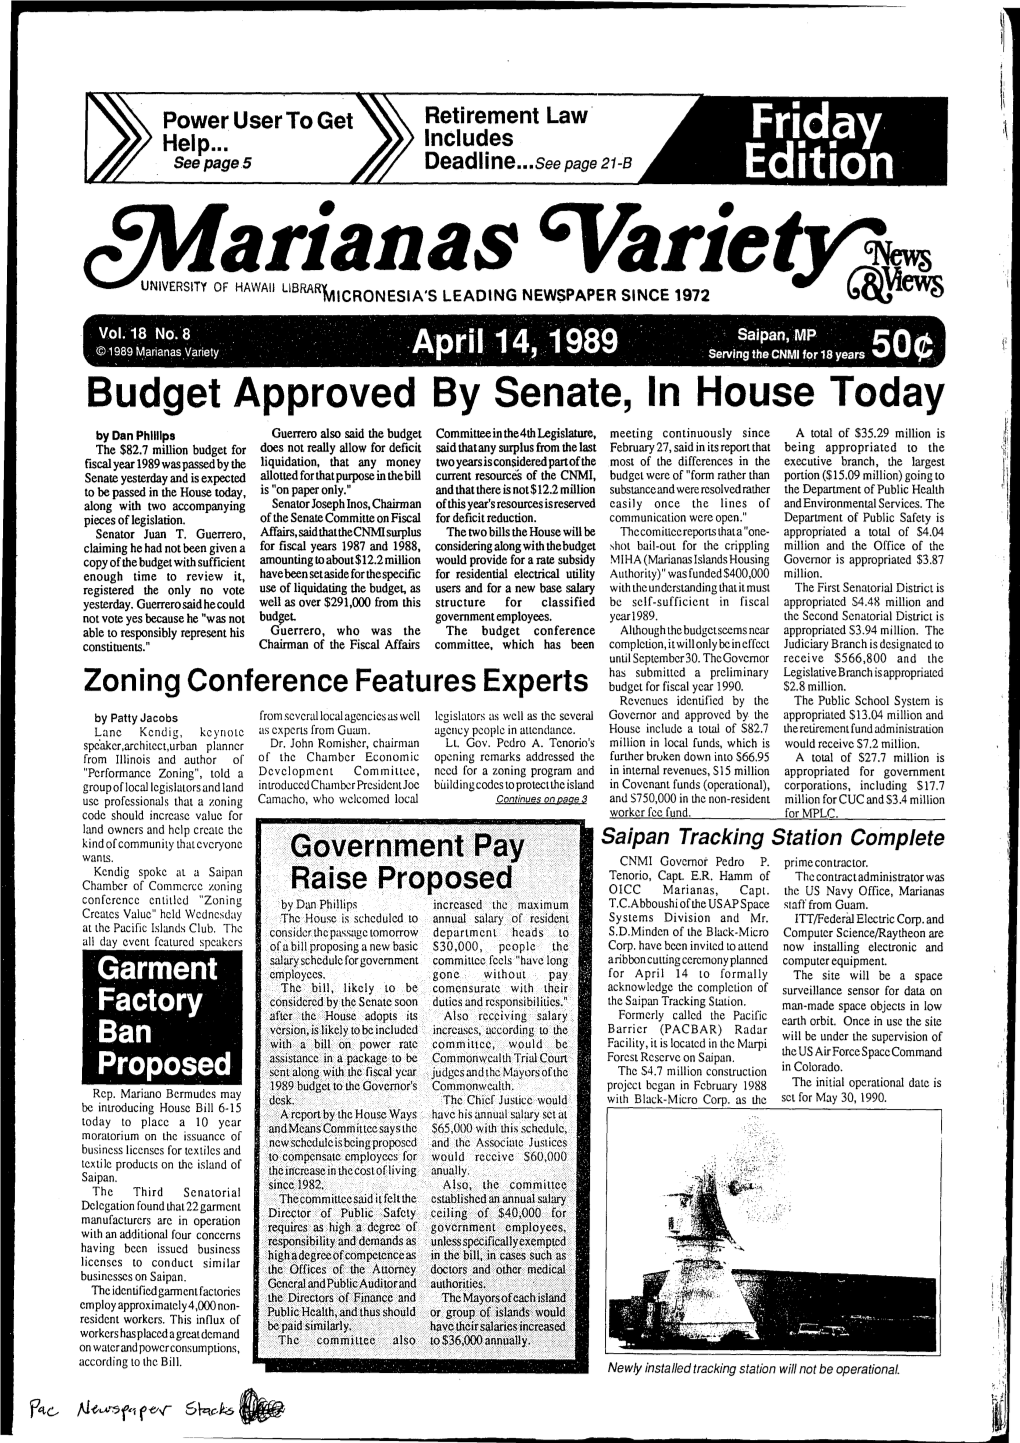 Marianas Variety News and Views--Page 3 Page 2--Marians Variety News and Views-- Friday, April 14, 1989